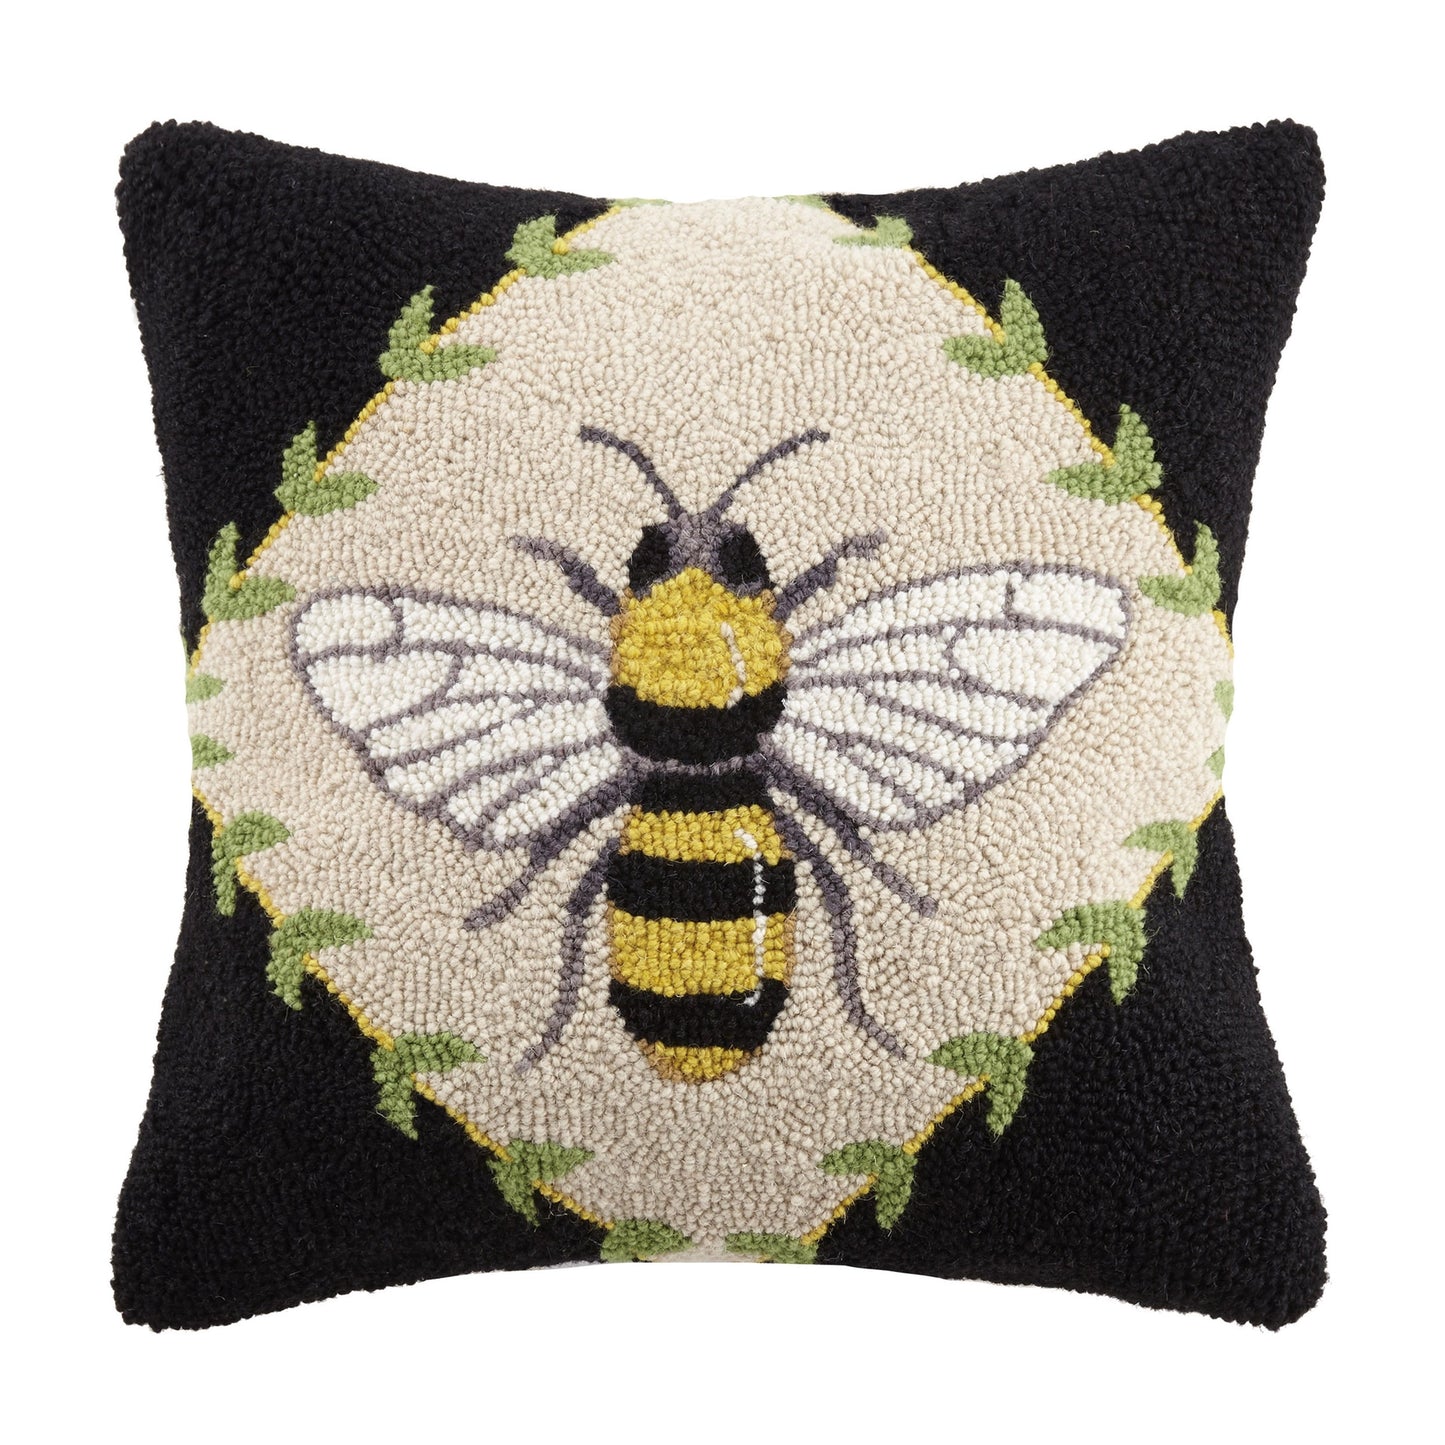 Bumble Bee Cushion